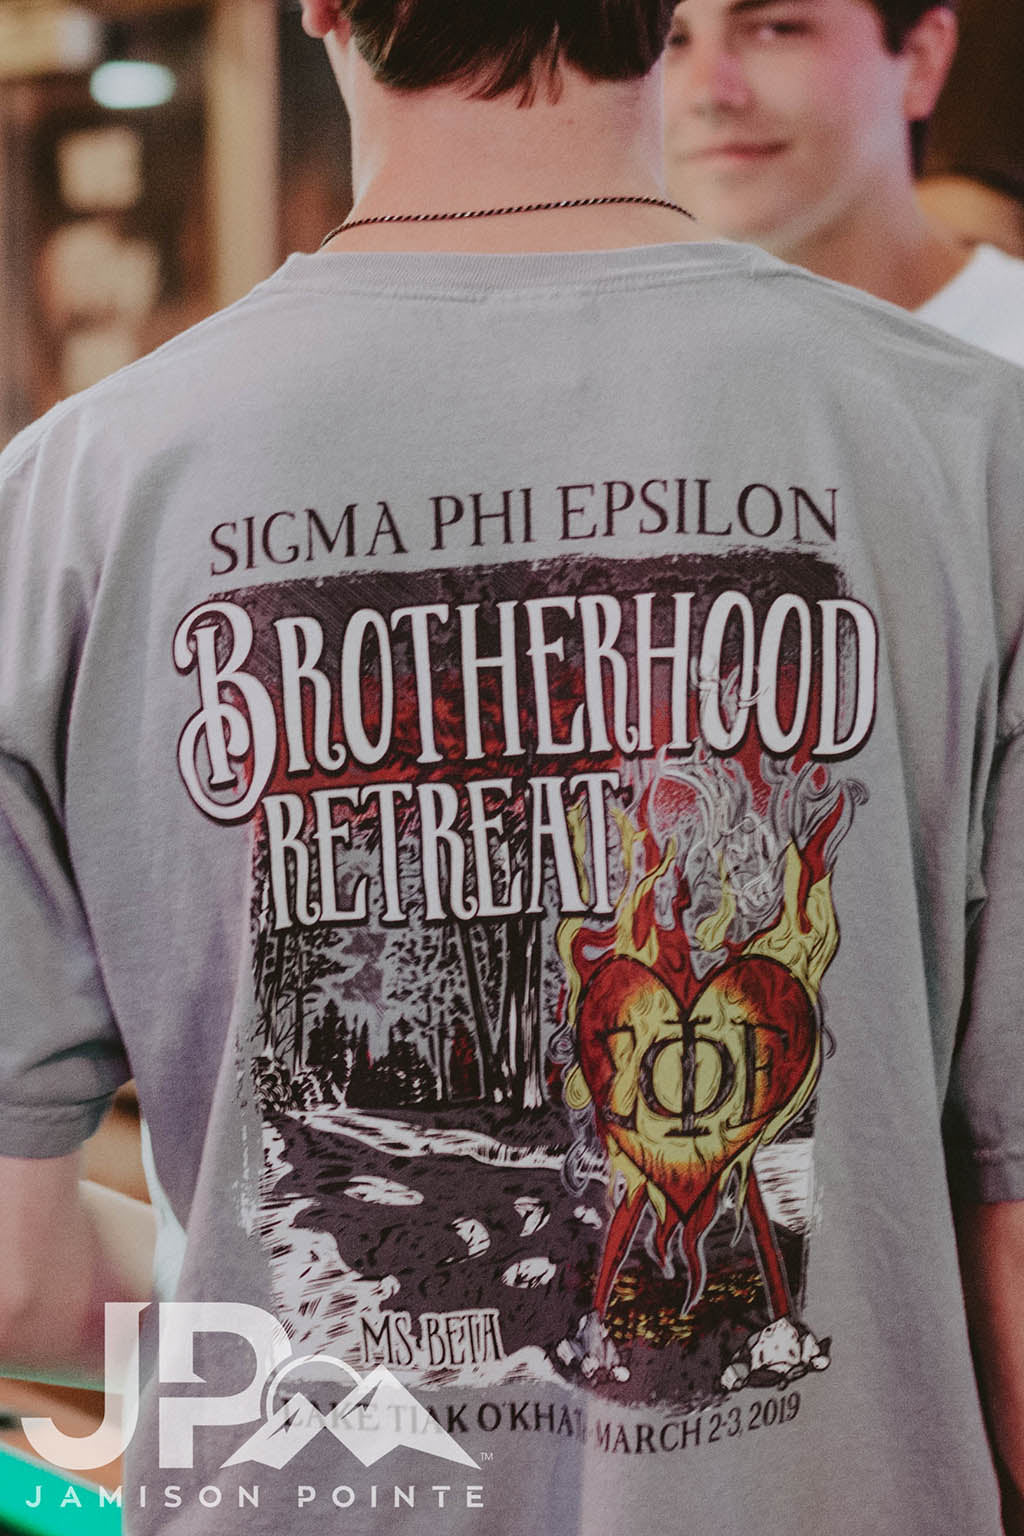 Sigma Phi Epsilon Brotherhood Retreat Tee